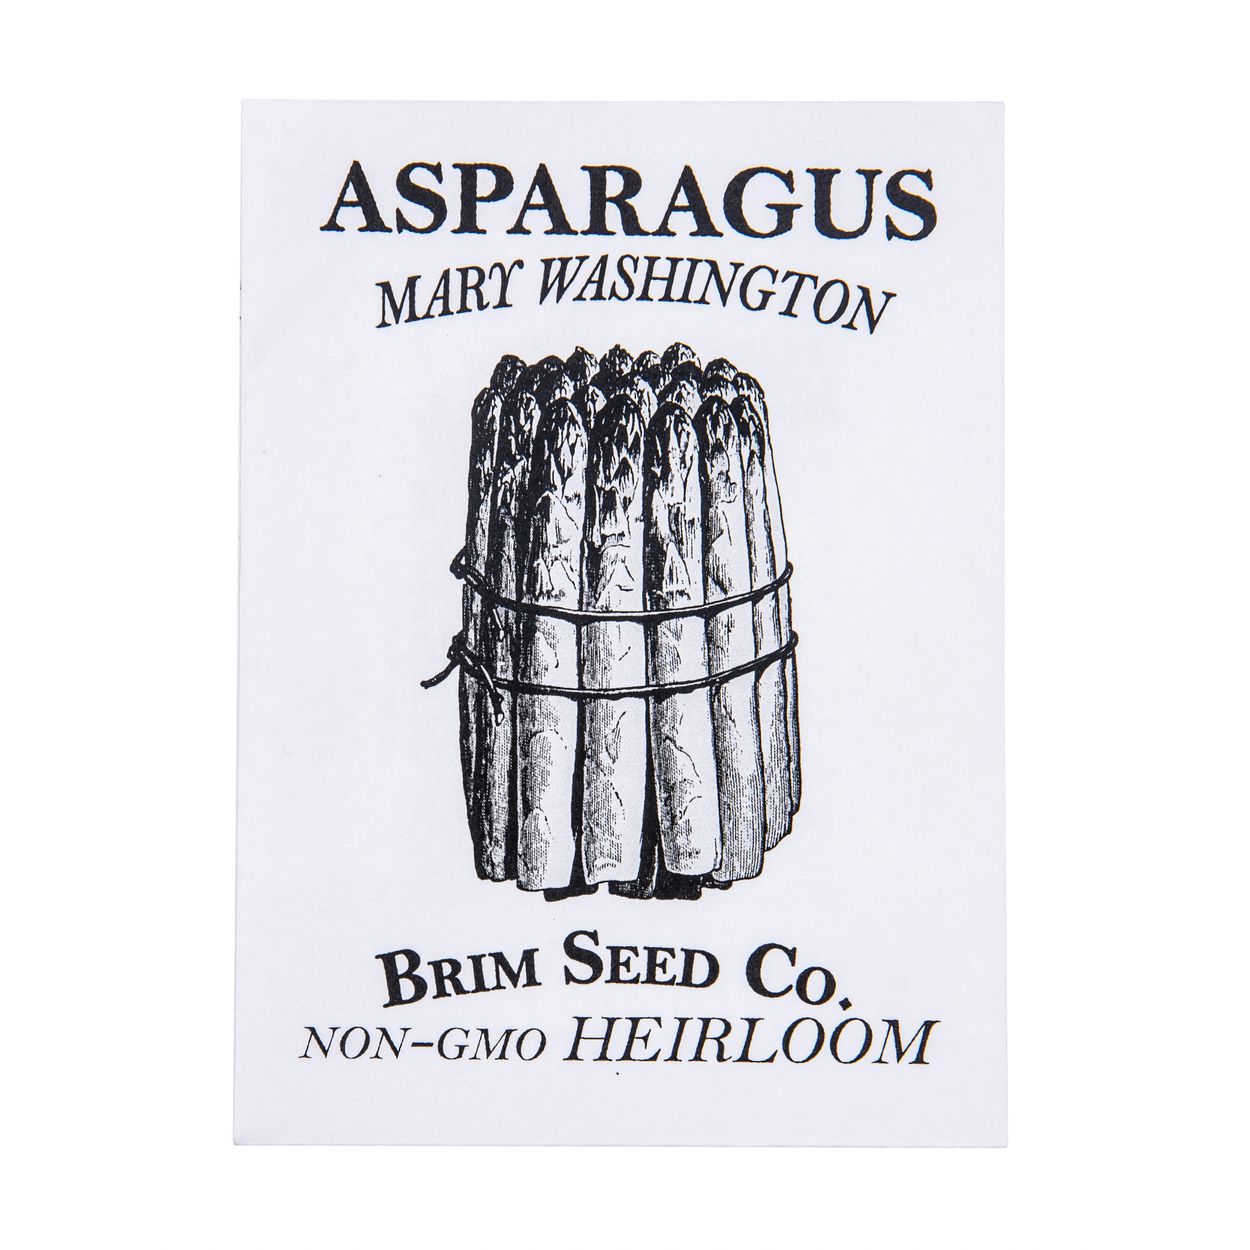 Brim Seed Co. - Mary Washington Asparagus Heirloom Seed